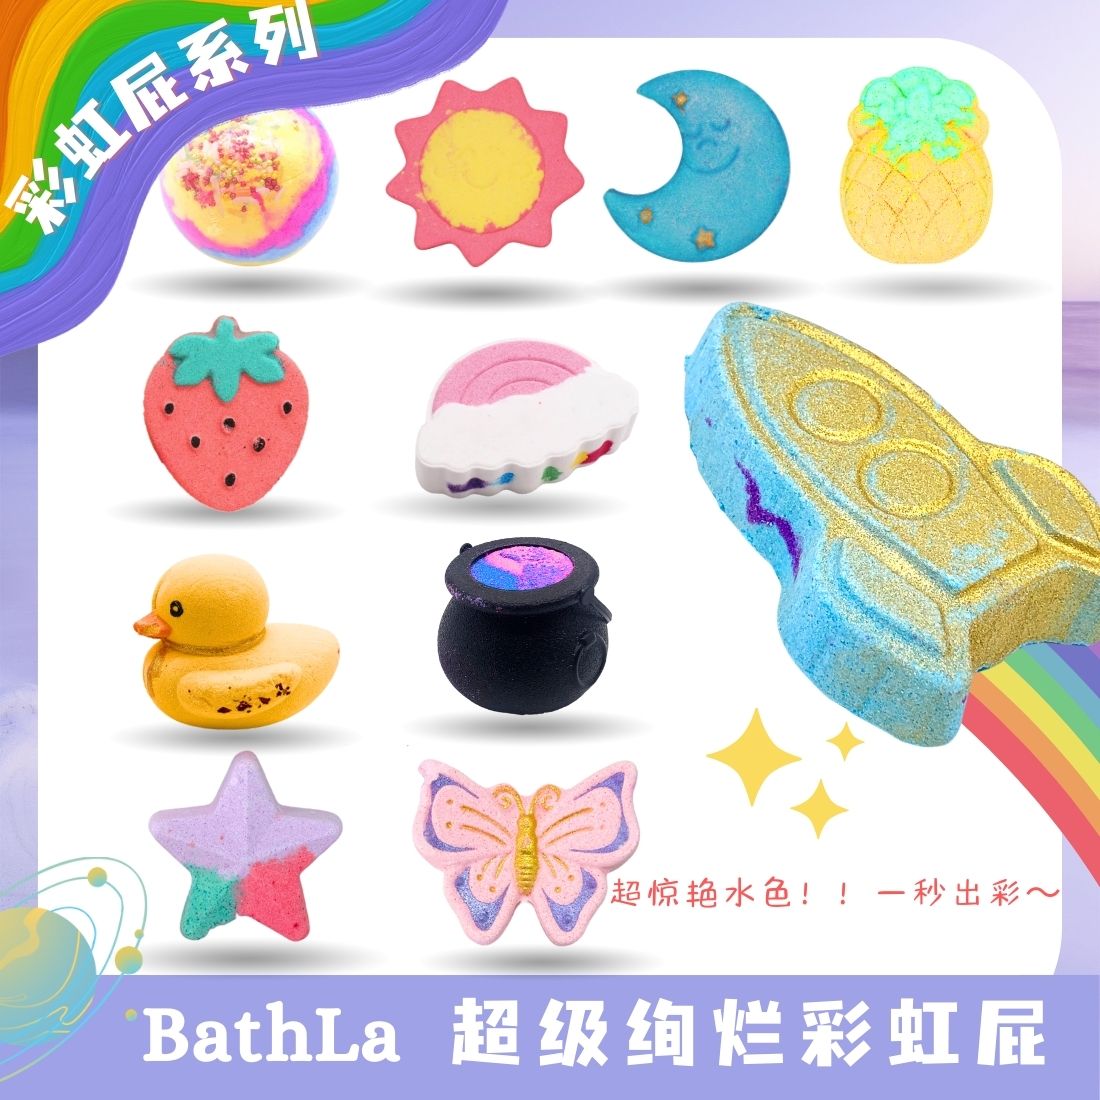 BathLab兒童專用精油浴泡澡球 小黃鴨造型 可愛造型療癒放鬆